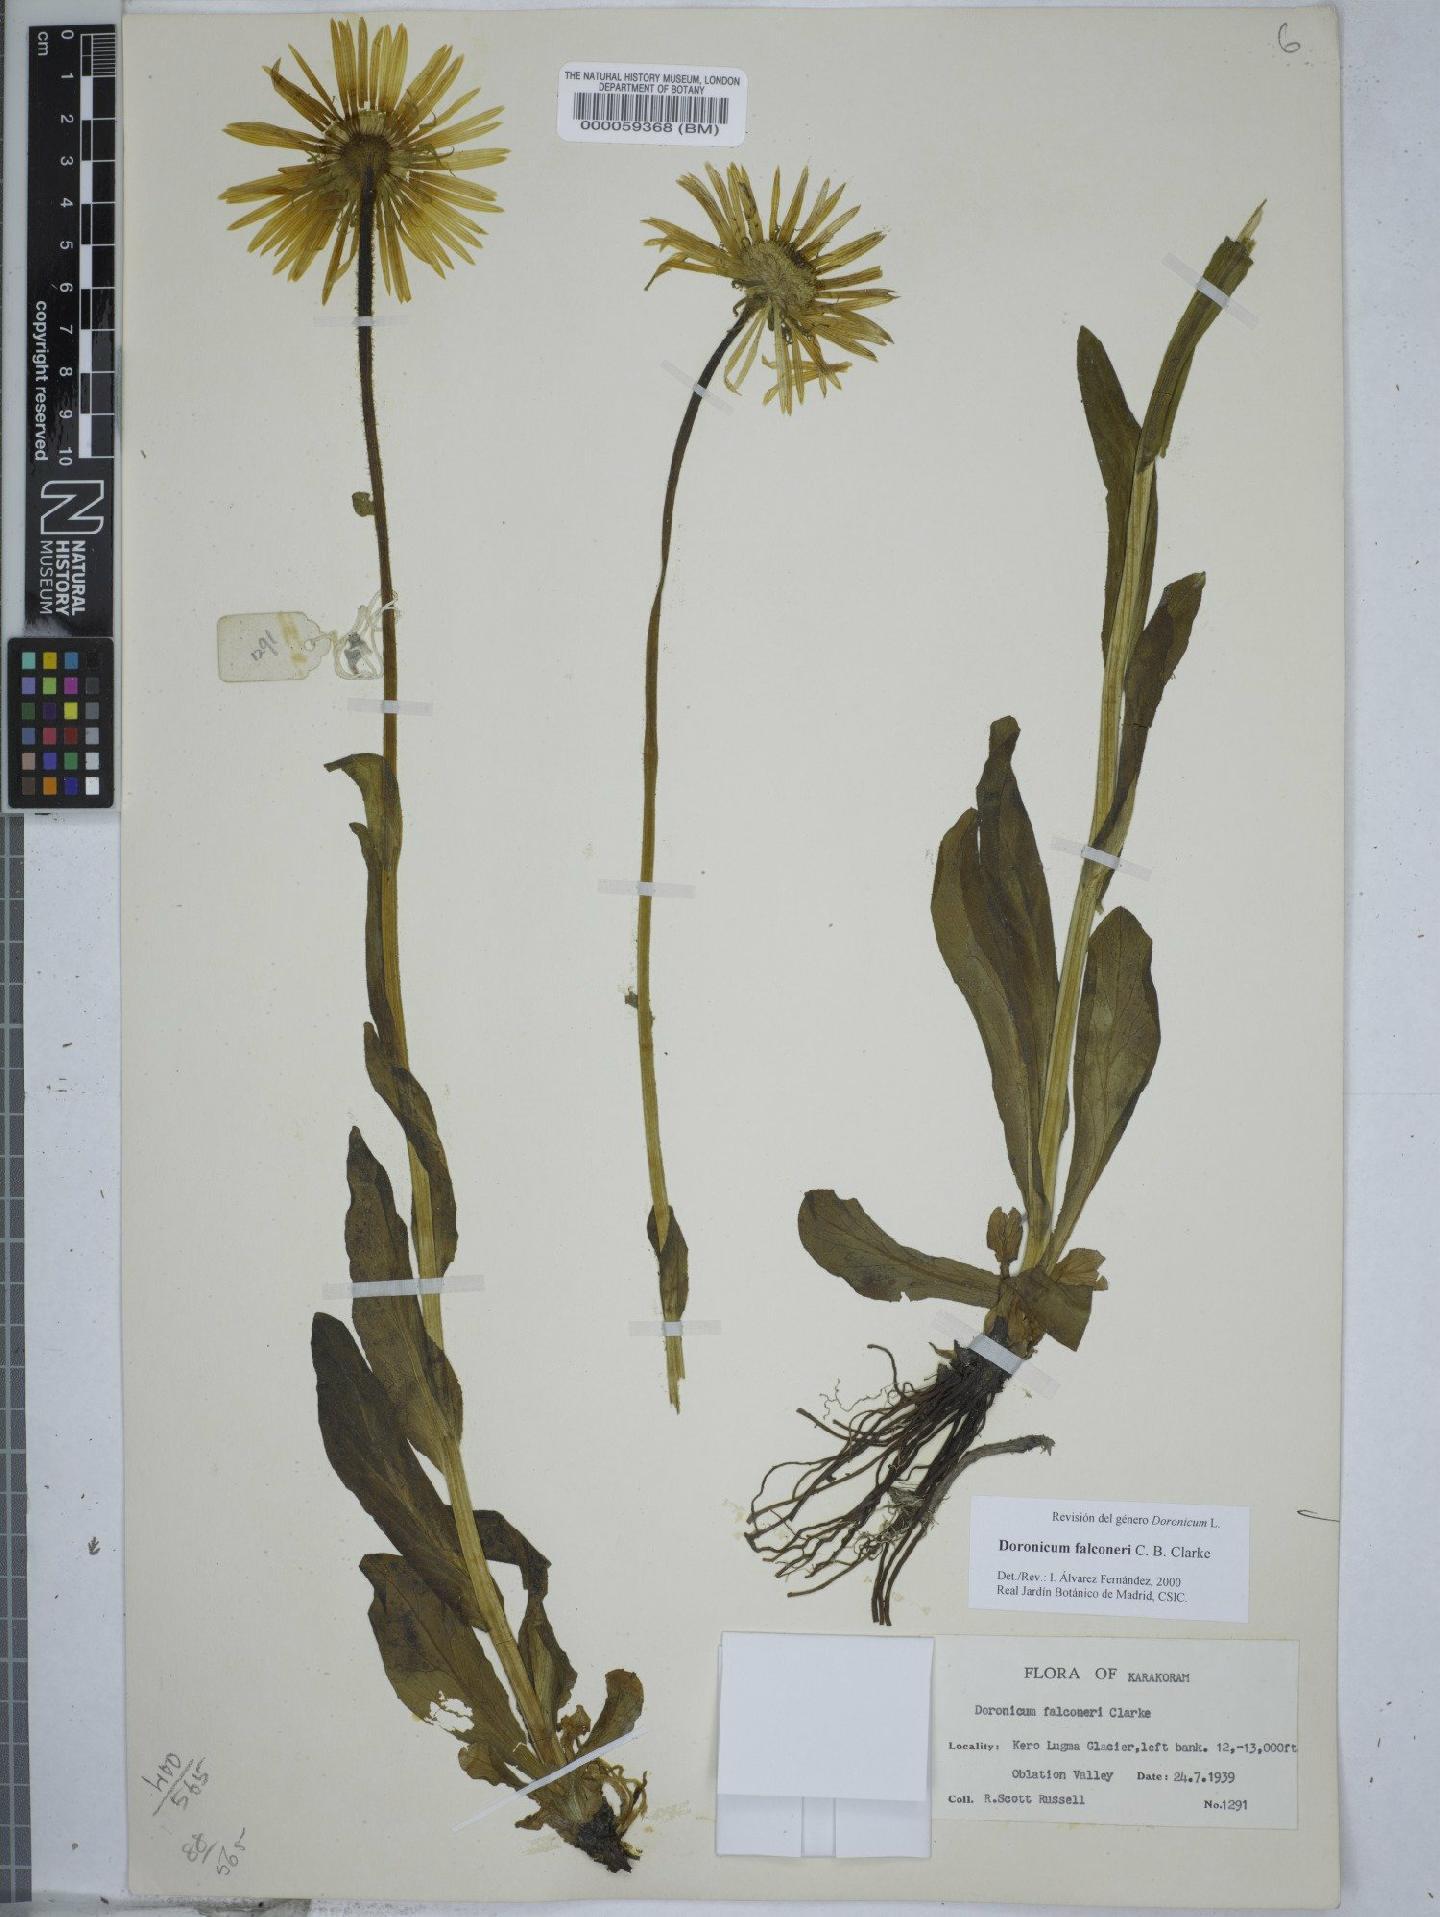 To NHMUK collection (Doronicum falconeri C.B.Clarke; NHMUK:ecatalogue:9149213)